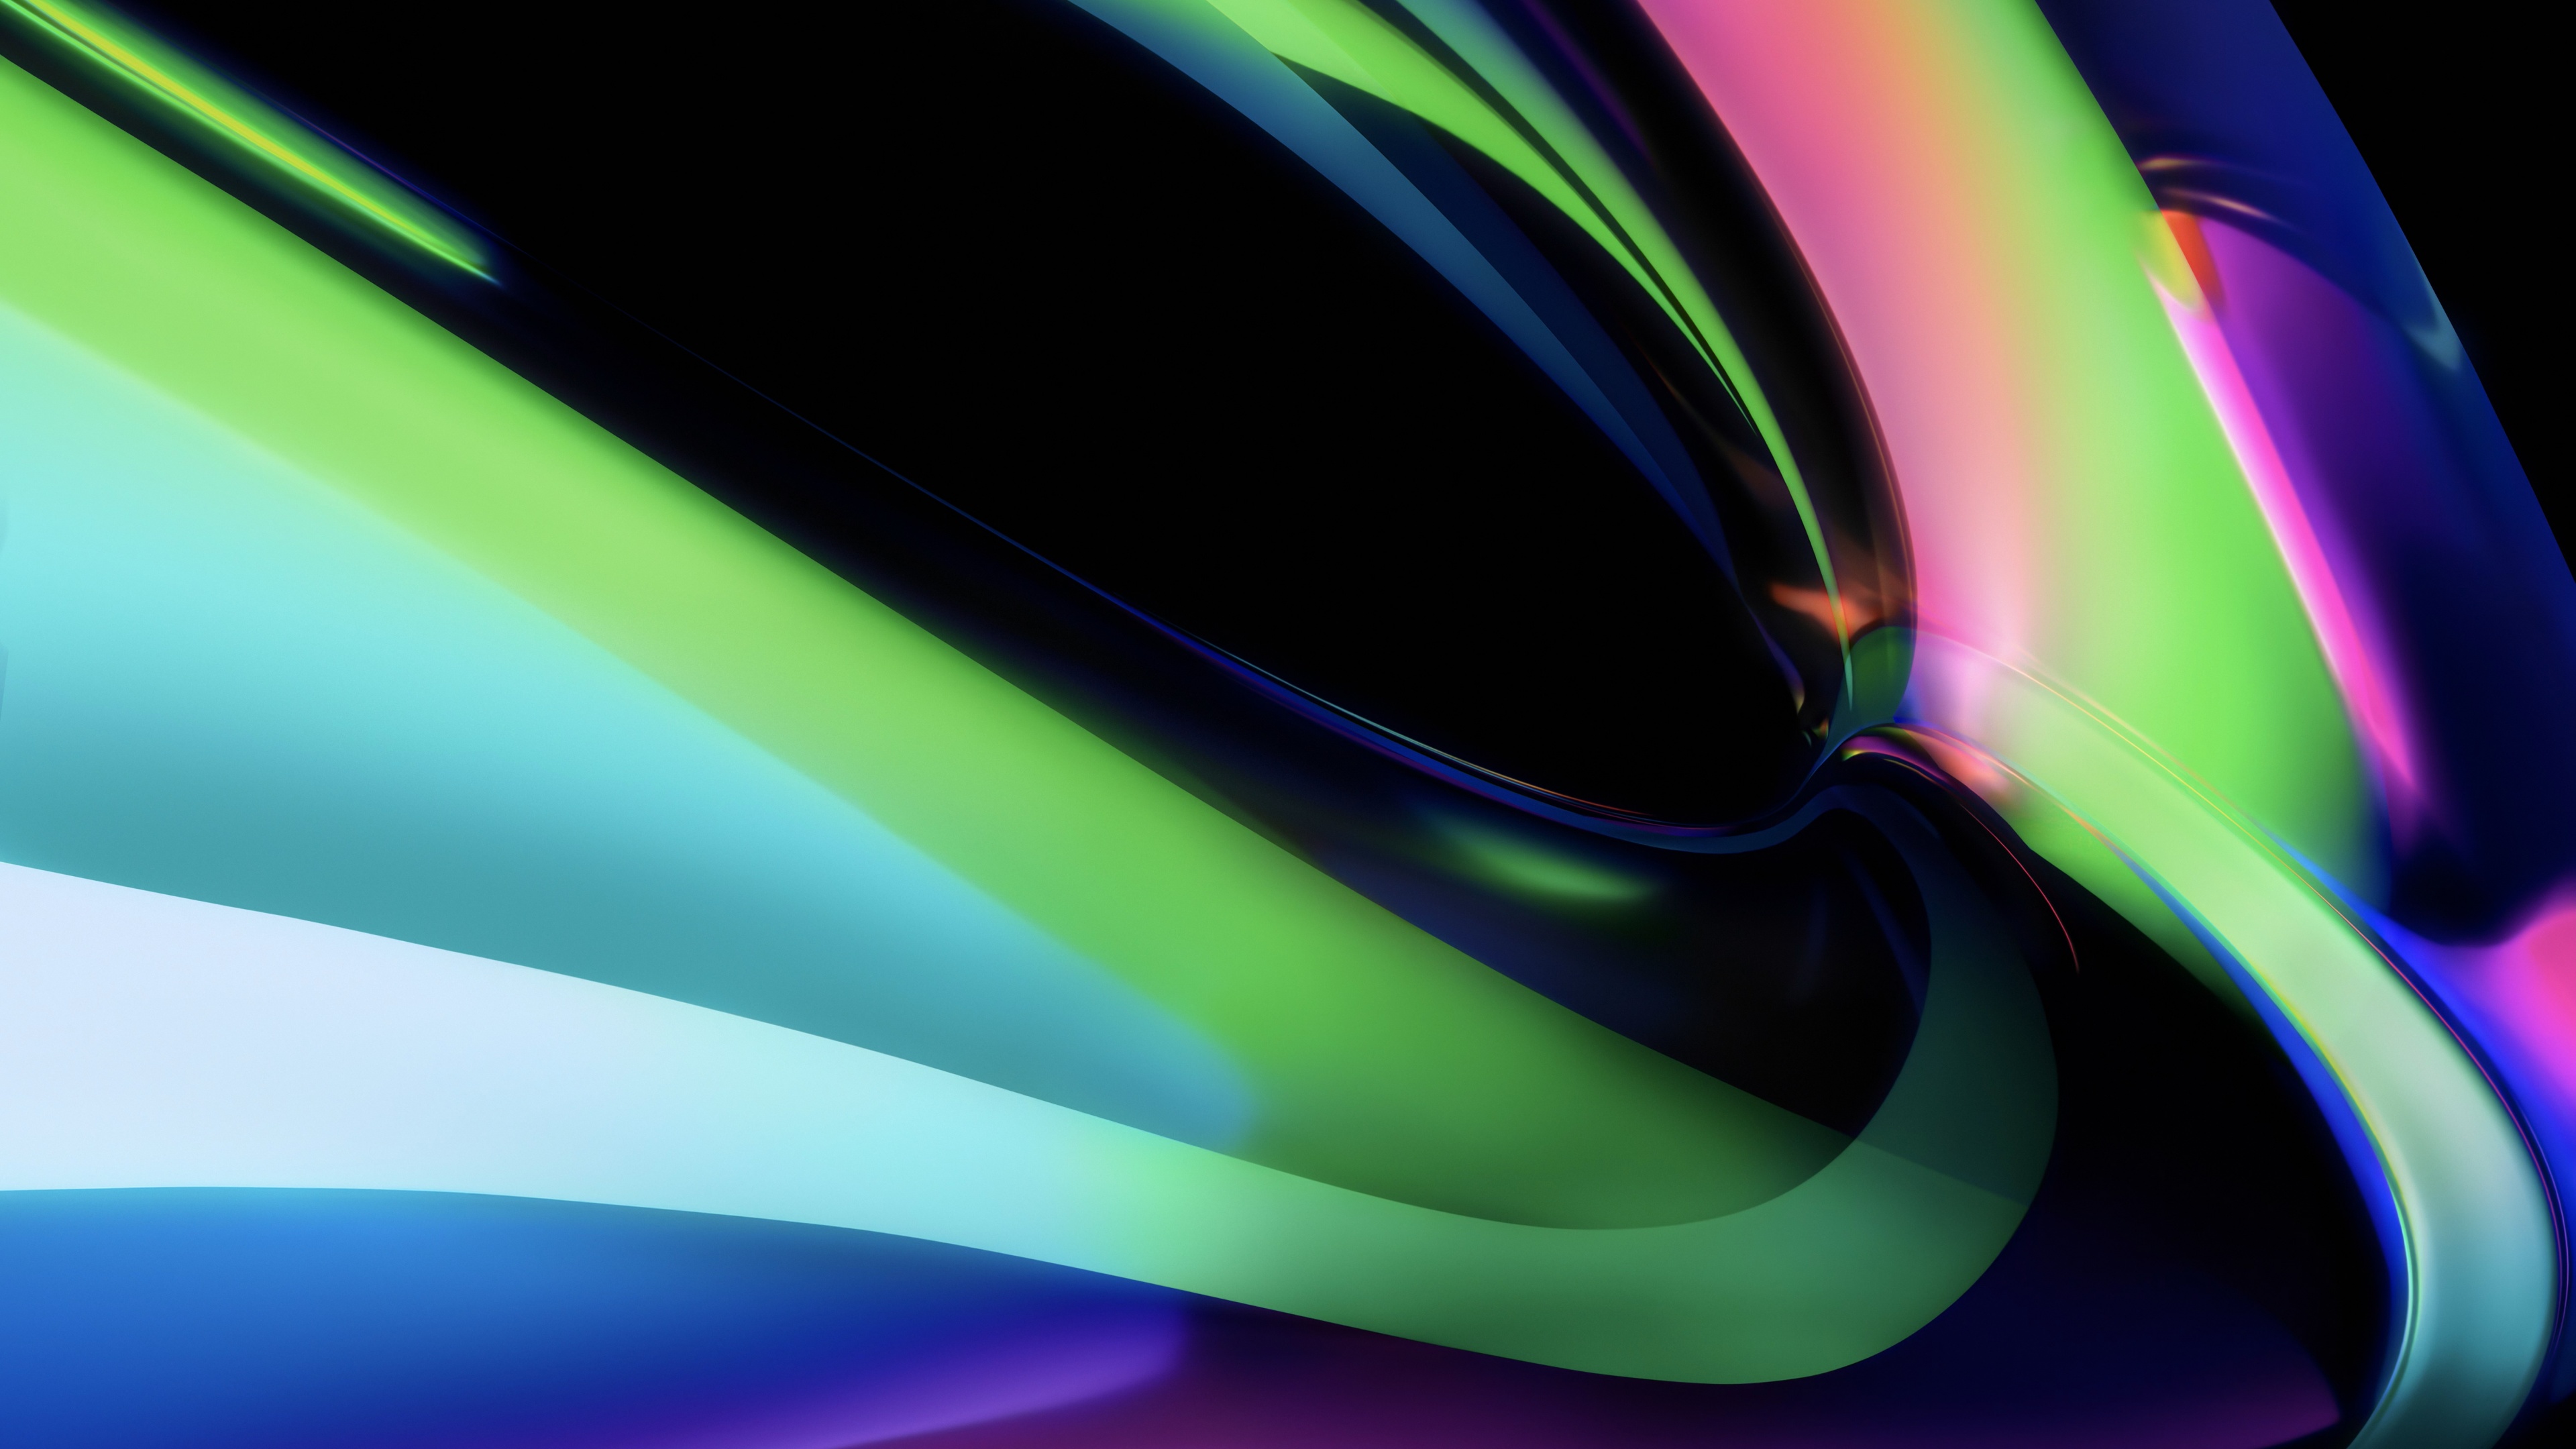 MacBook Pro Wallpaper 4K, Apple M1, Multicolor, Abstract, #4032